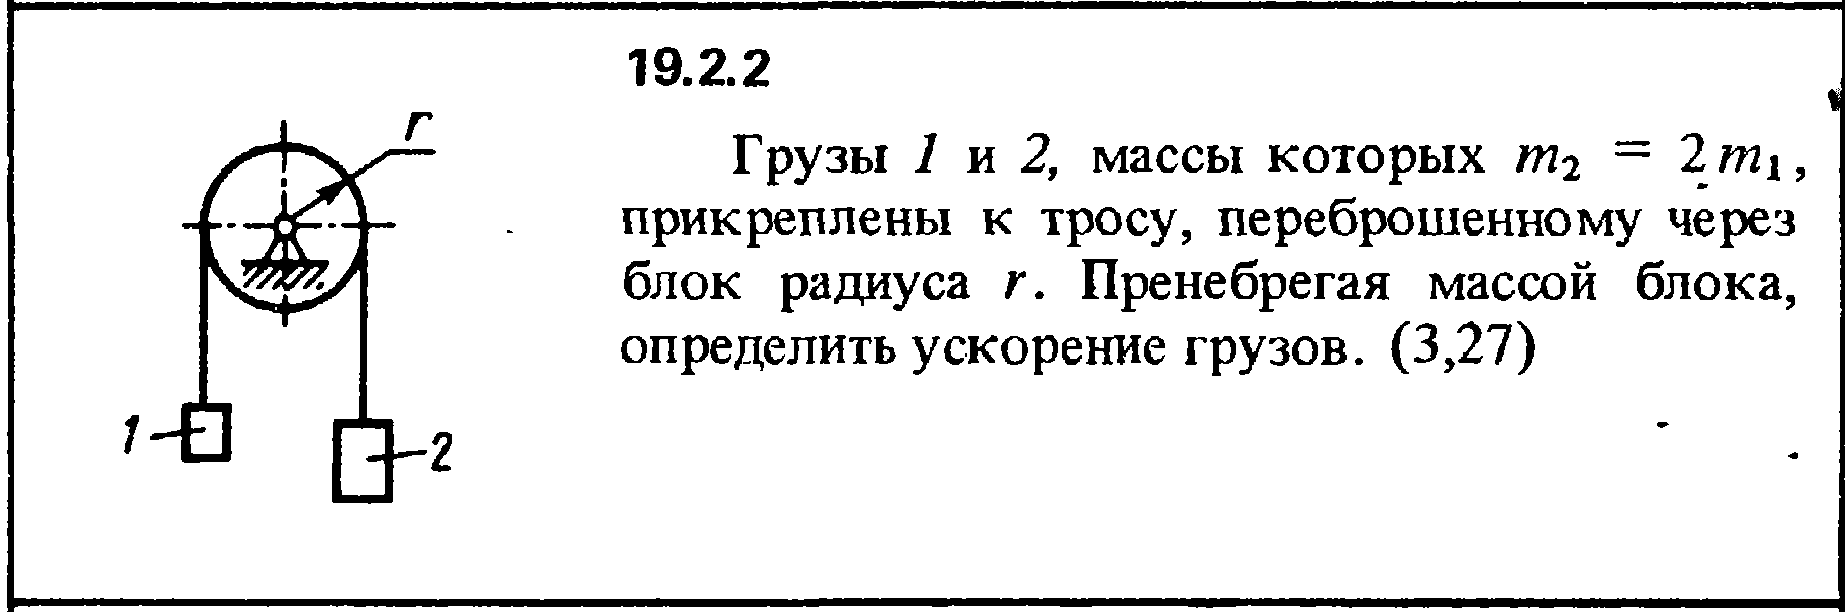 Решение 19.2.2 из сборника (решебника) Кепе О.Е. 1989